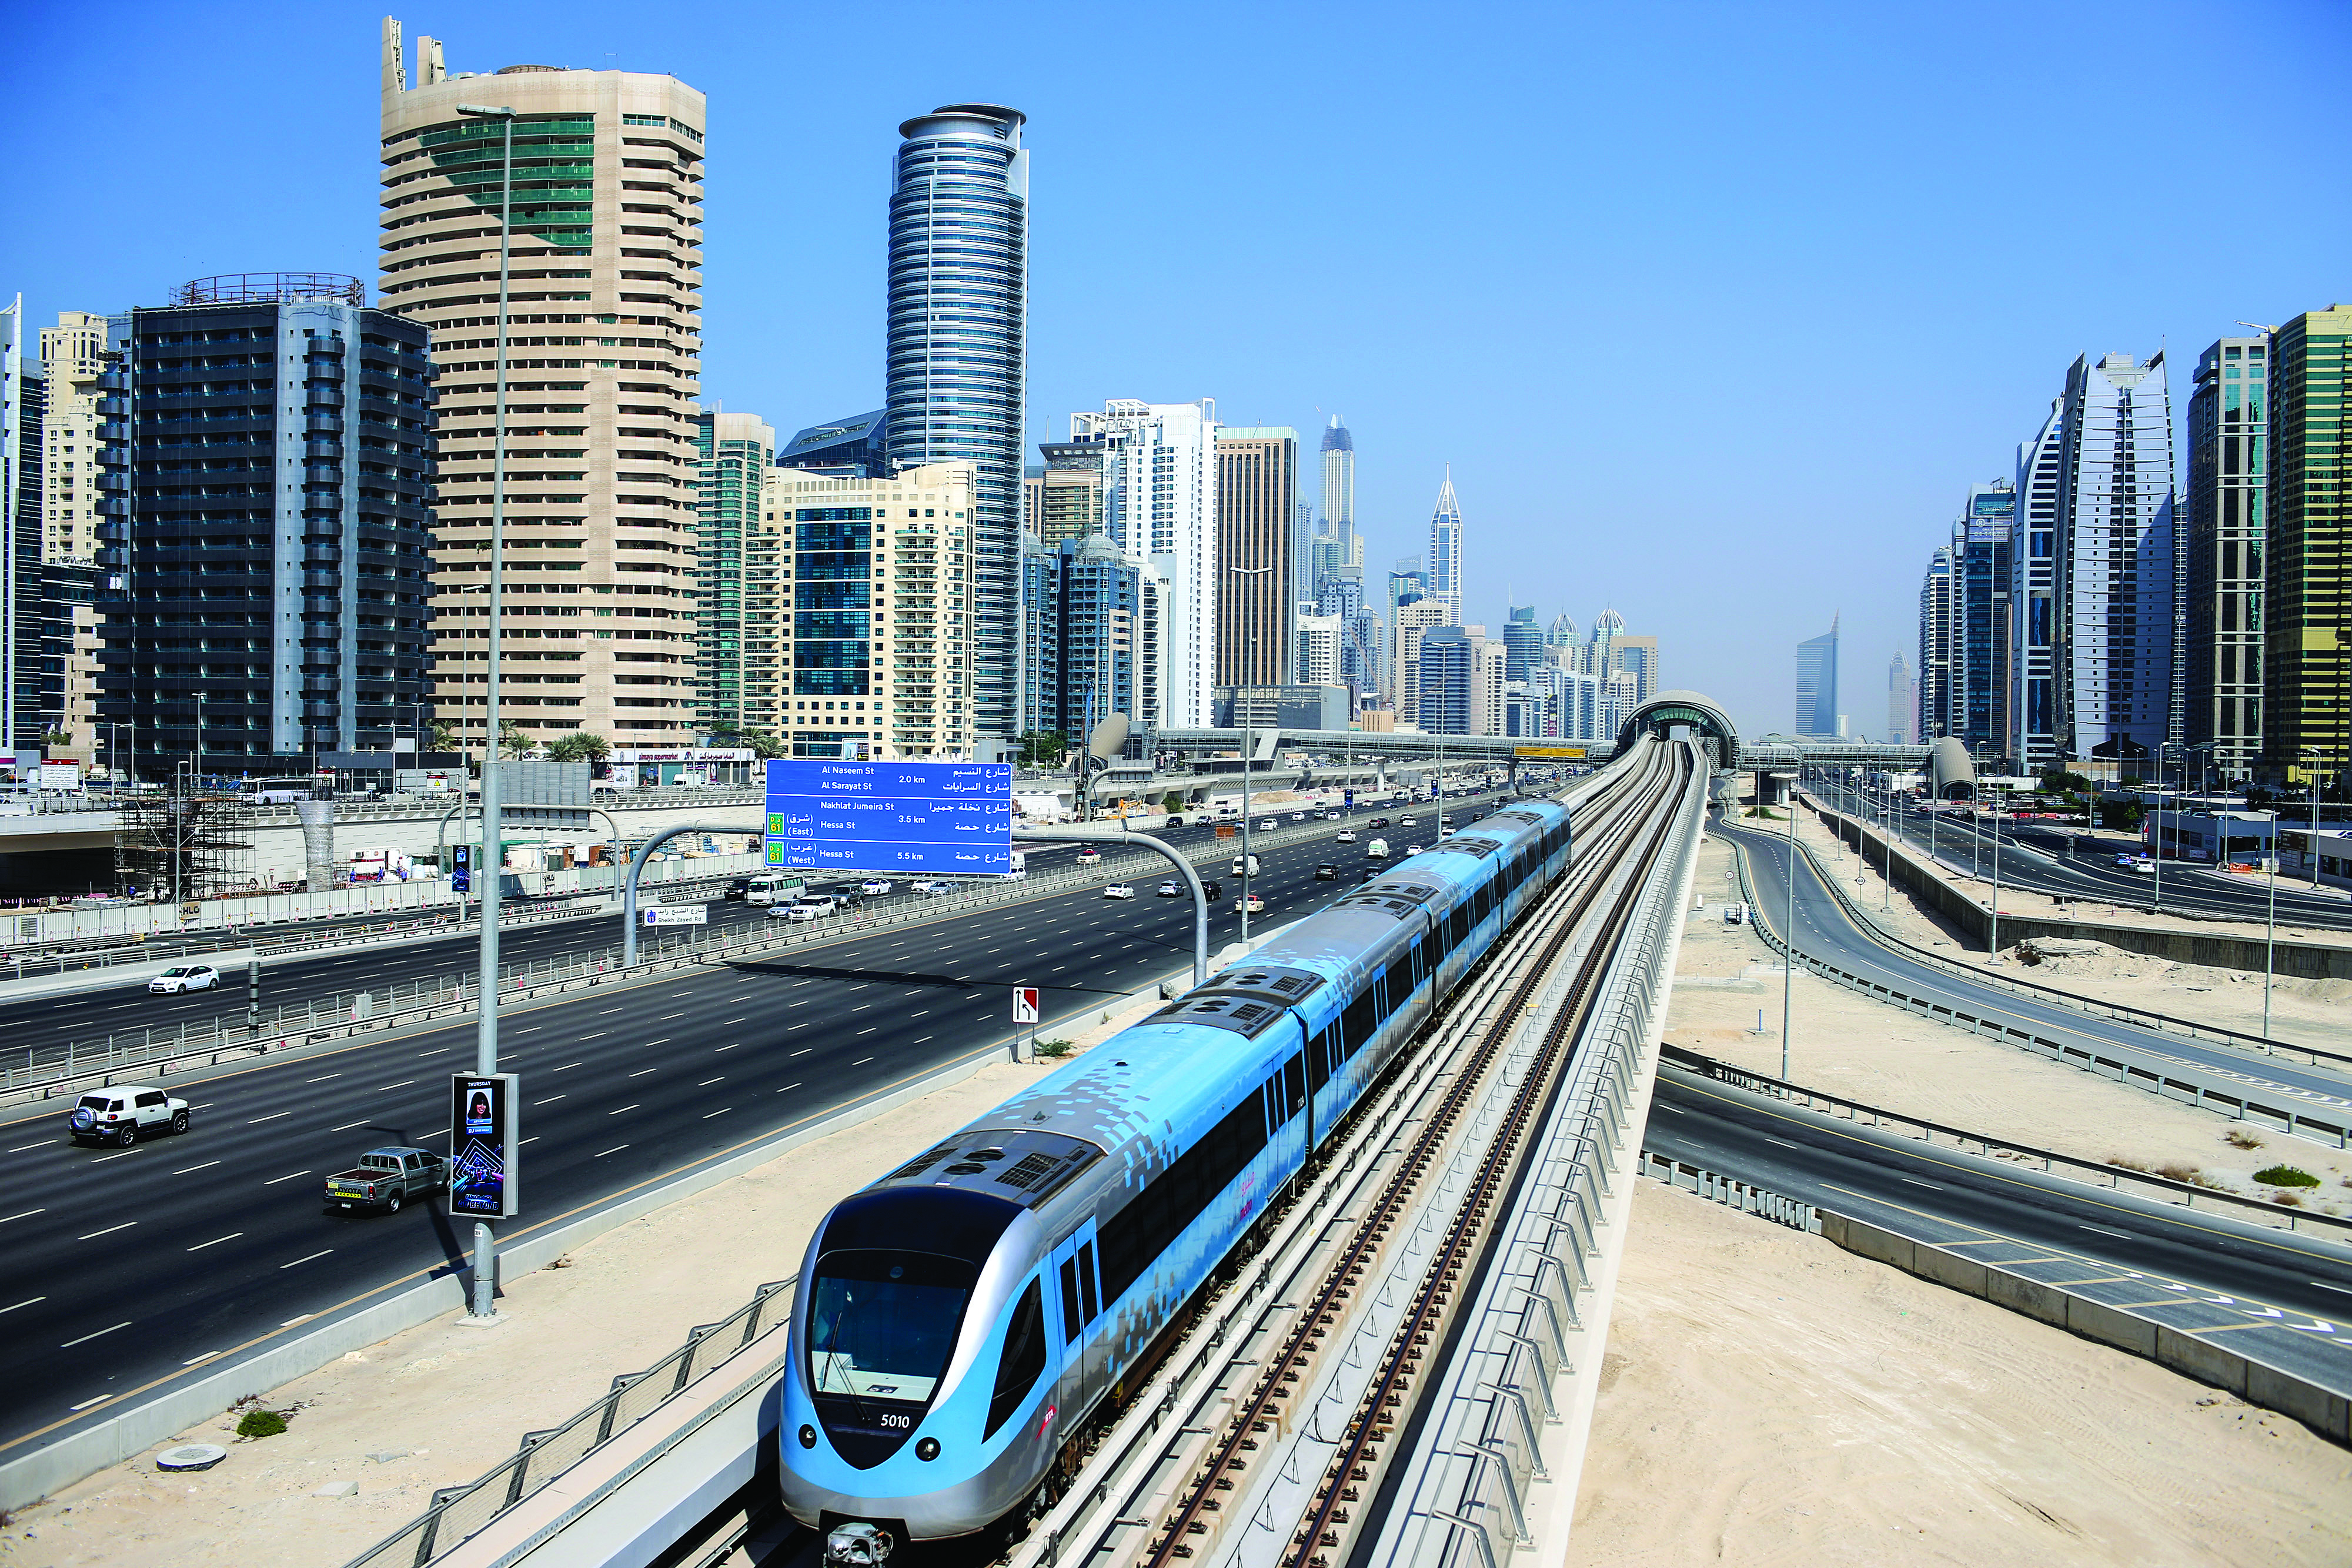 Dubai real estate market focussing on developing unutilised land in urban areas